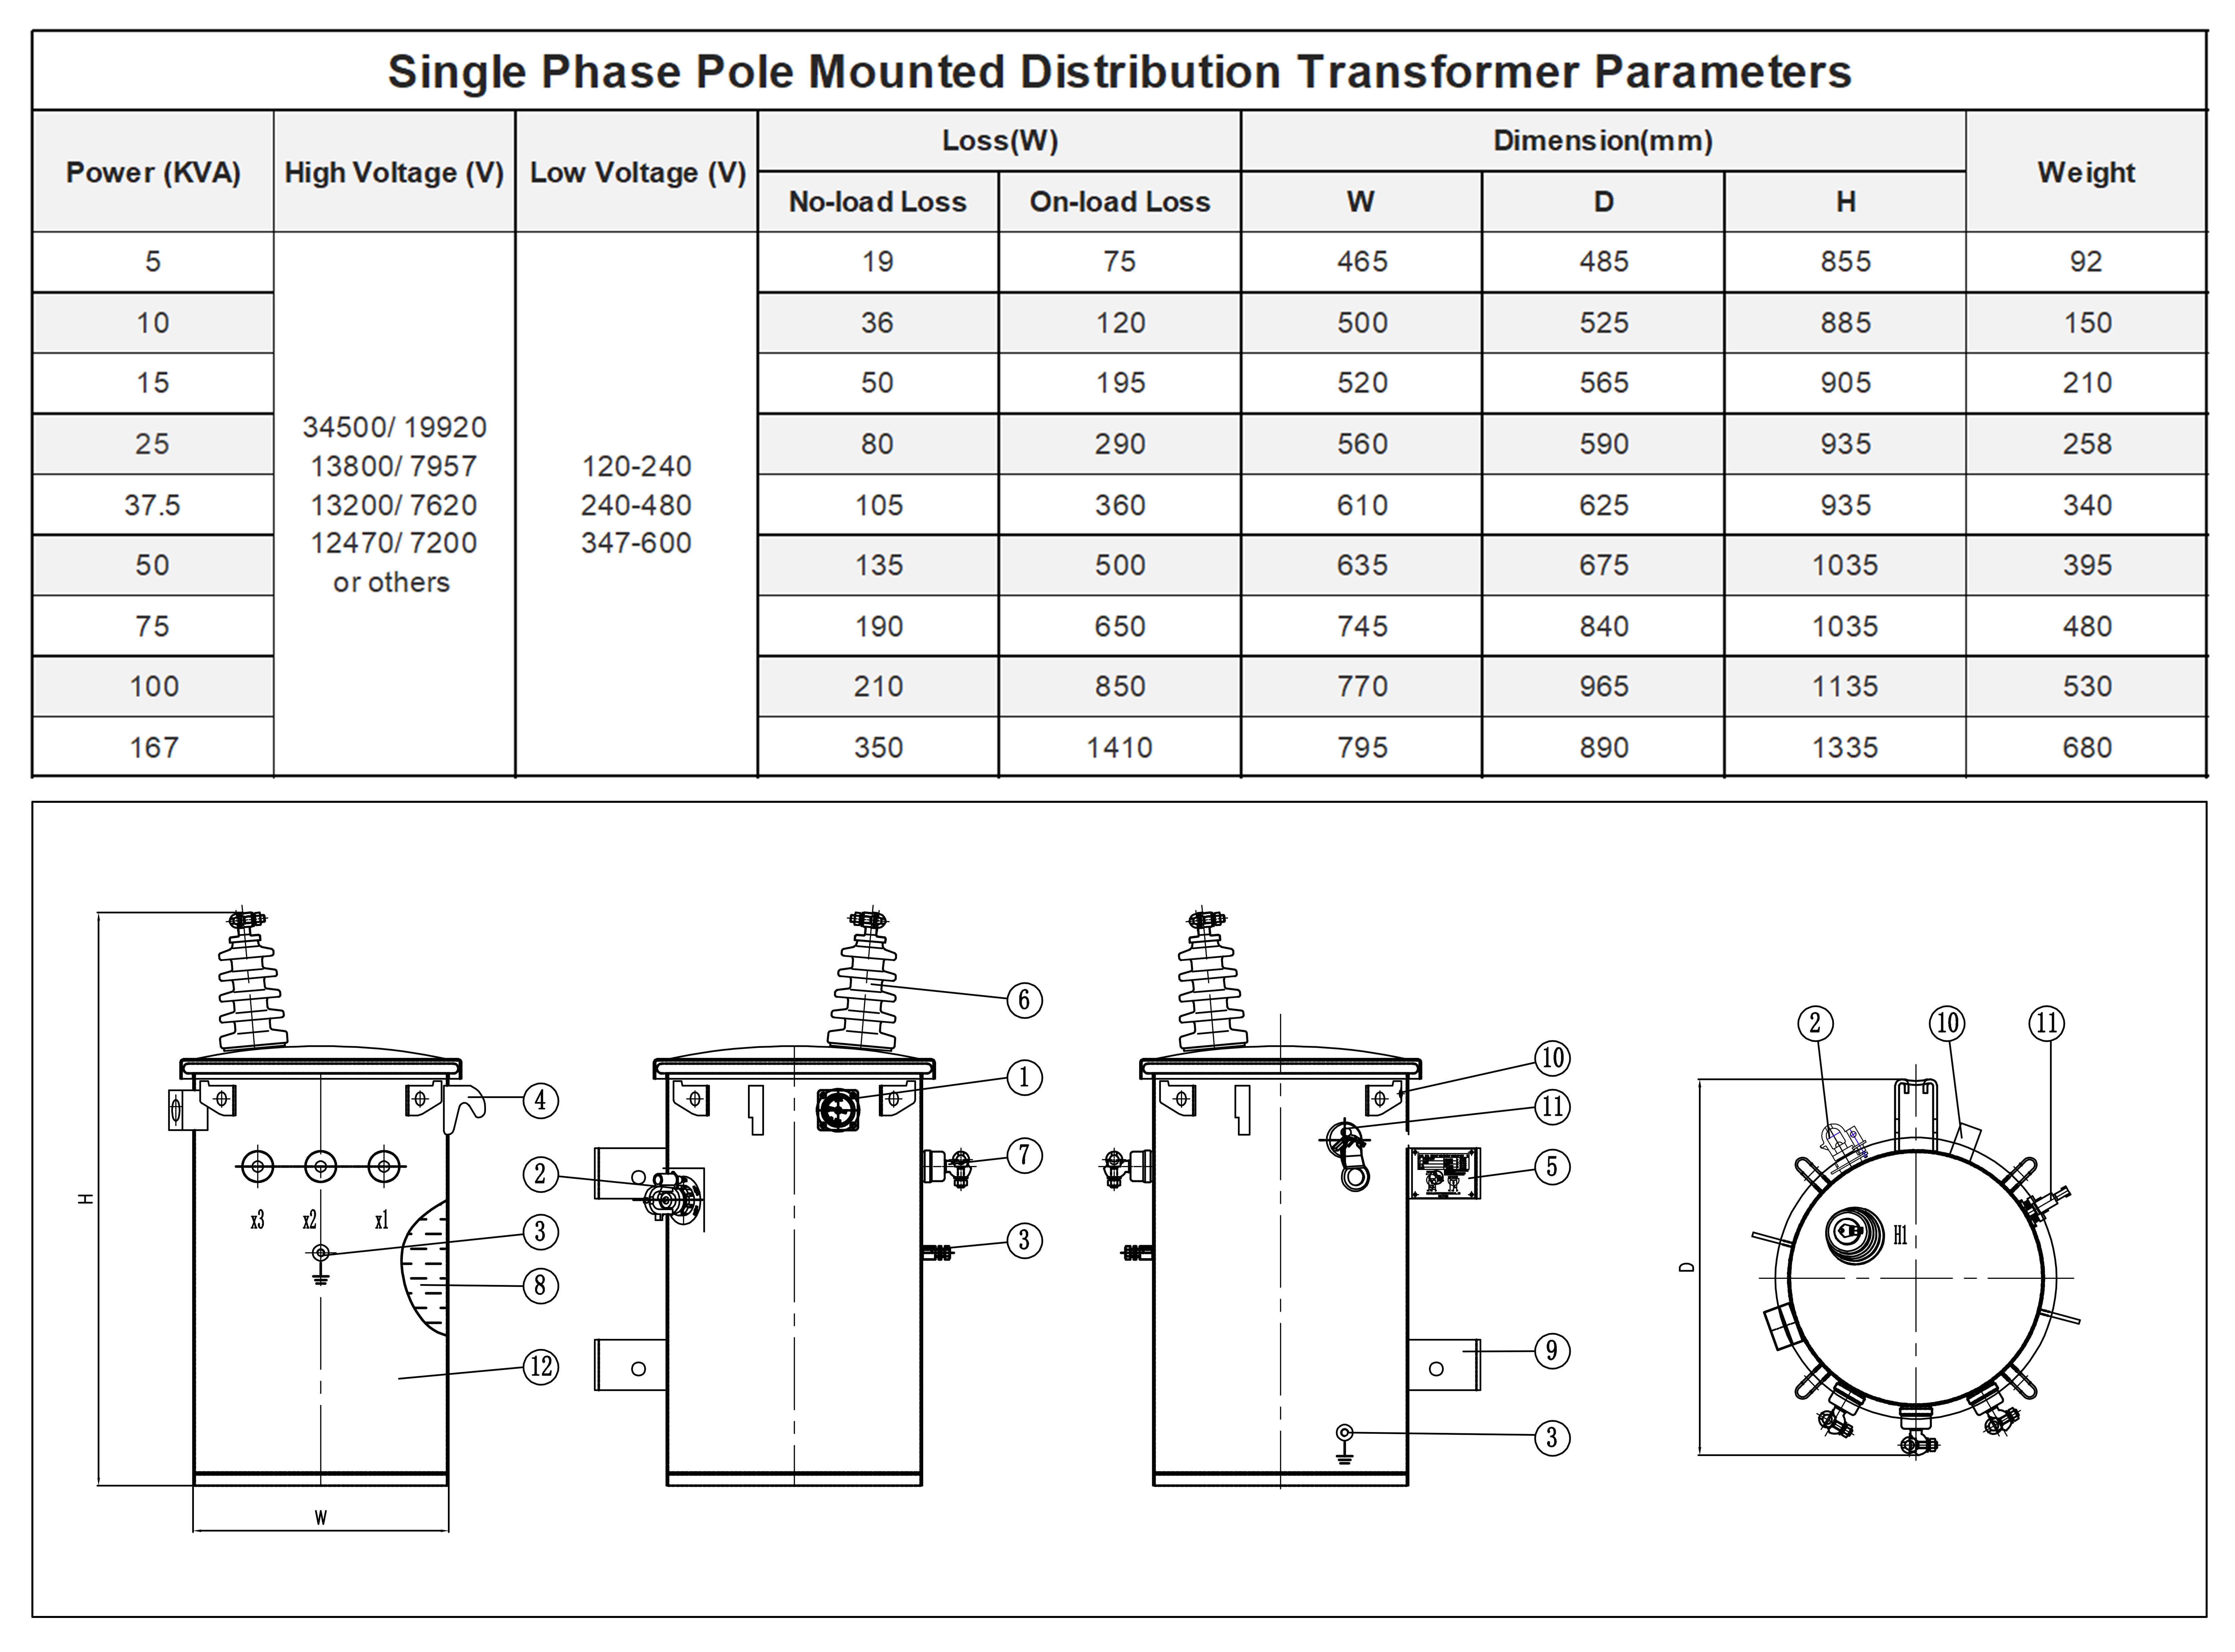 167kVA Single Phase Pole Mounted Distribution Transformer